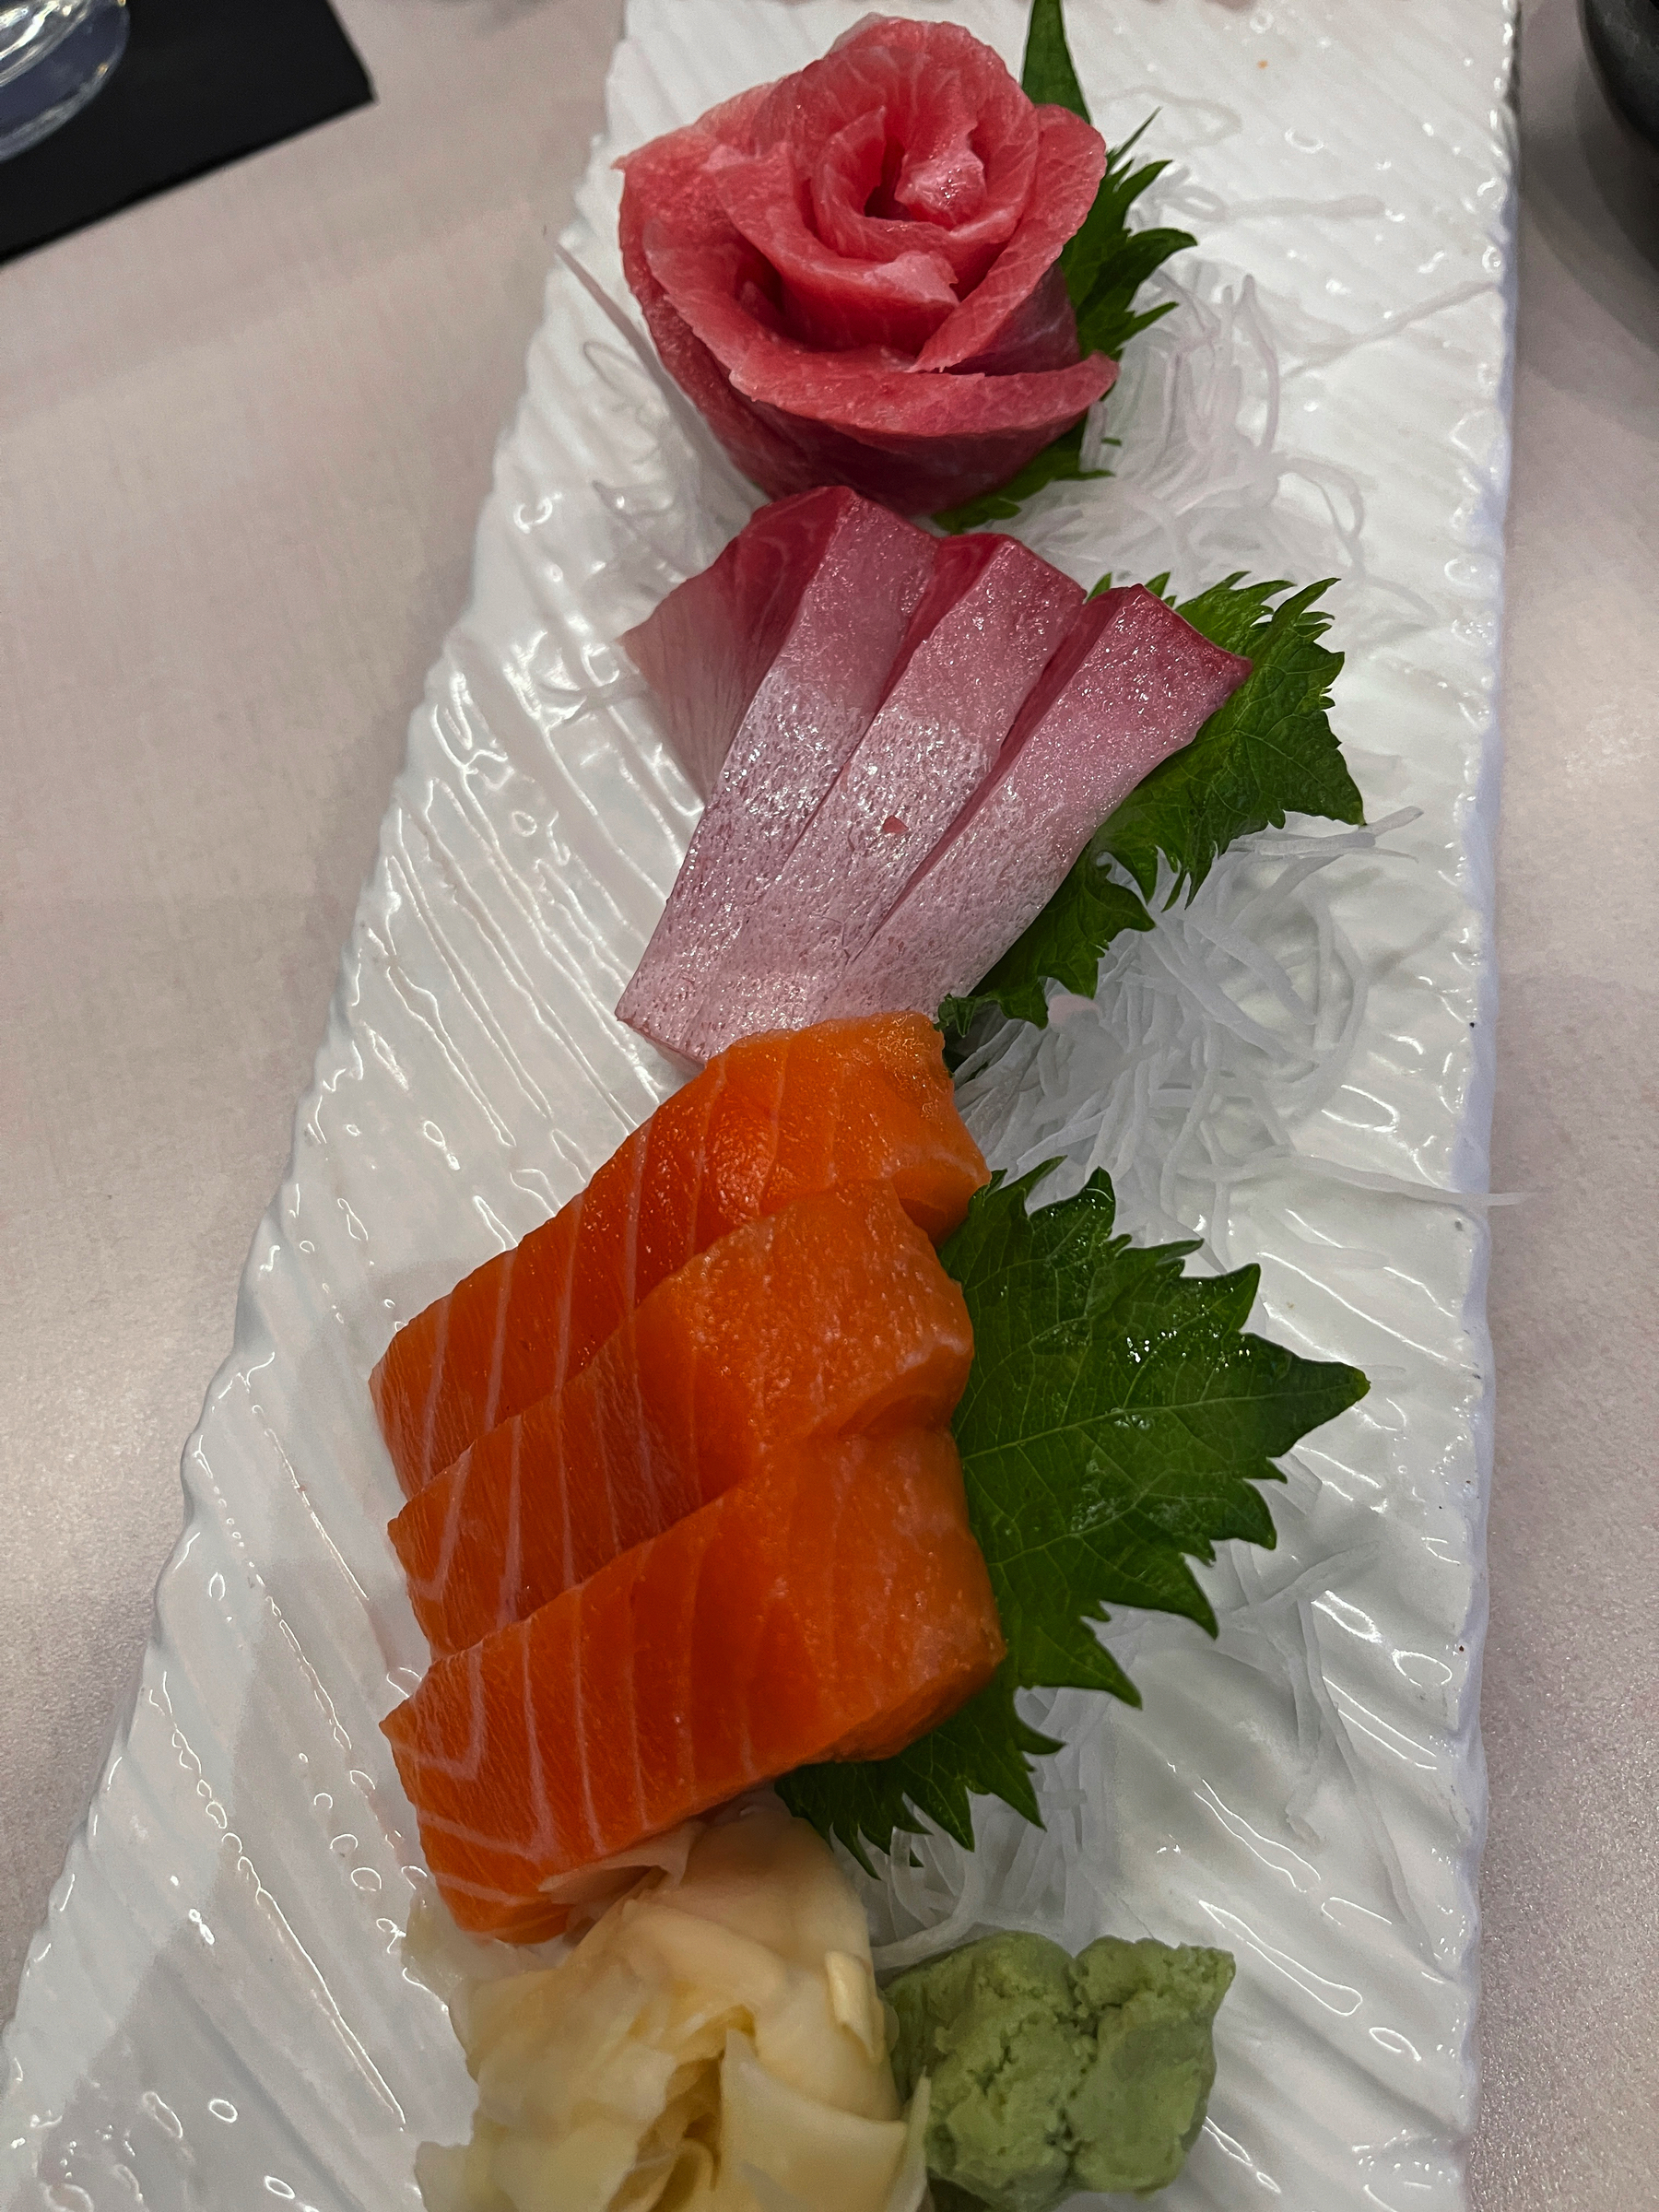 Slices of sashimi - salmon, tuna, ginger, wasabi.